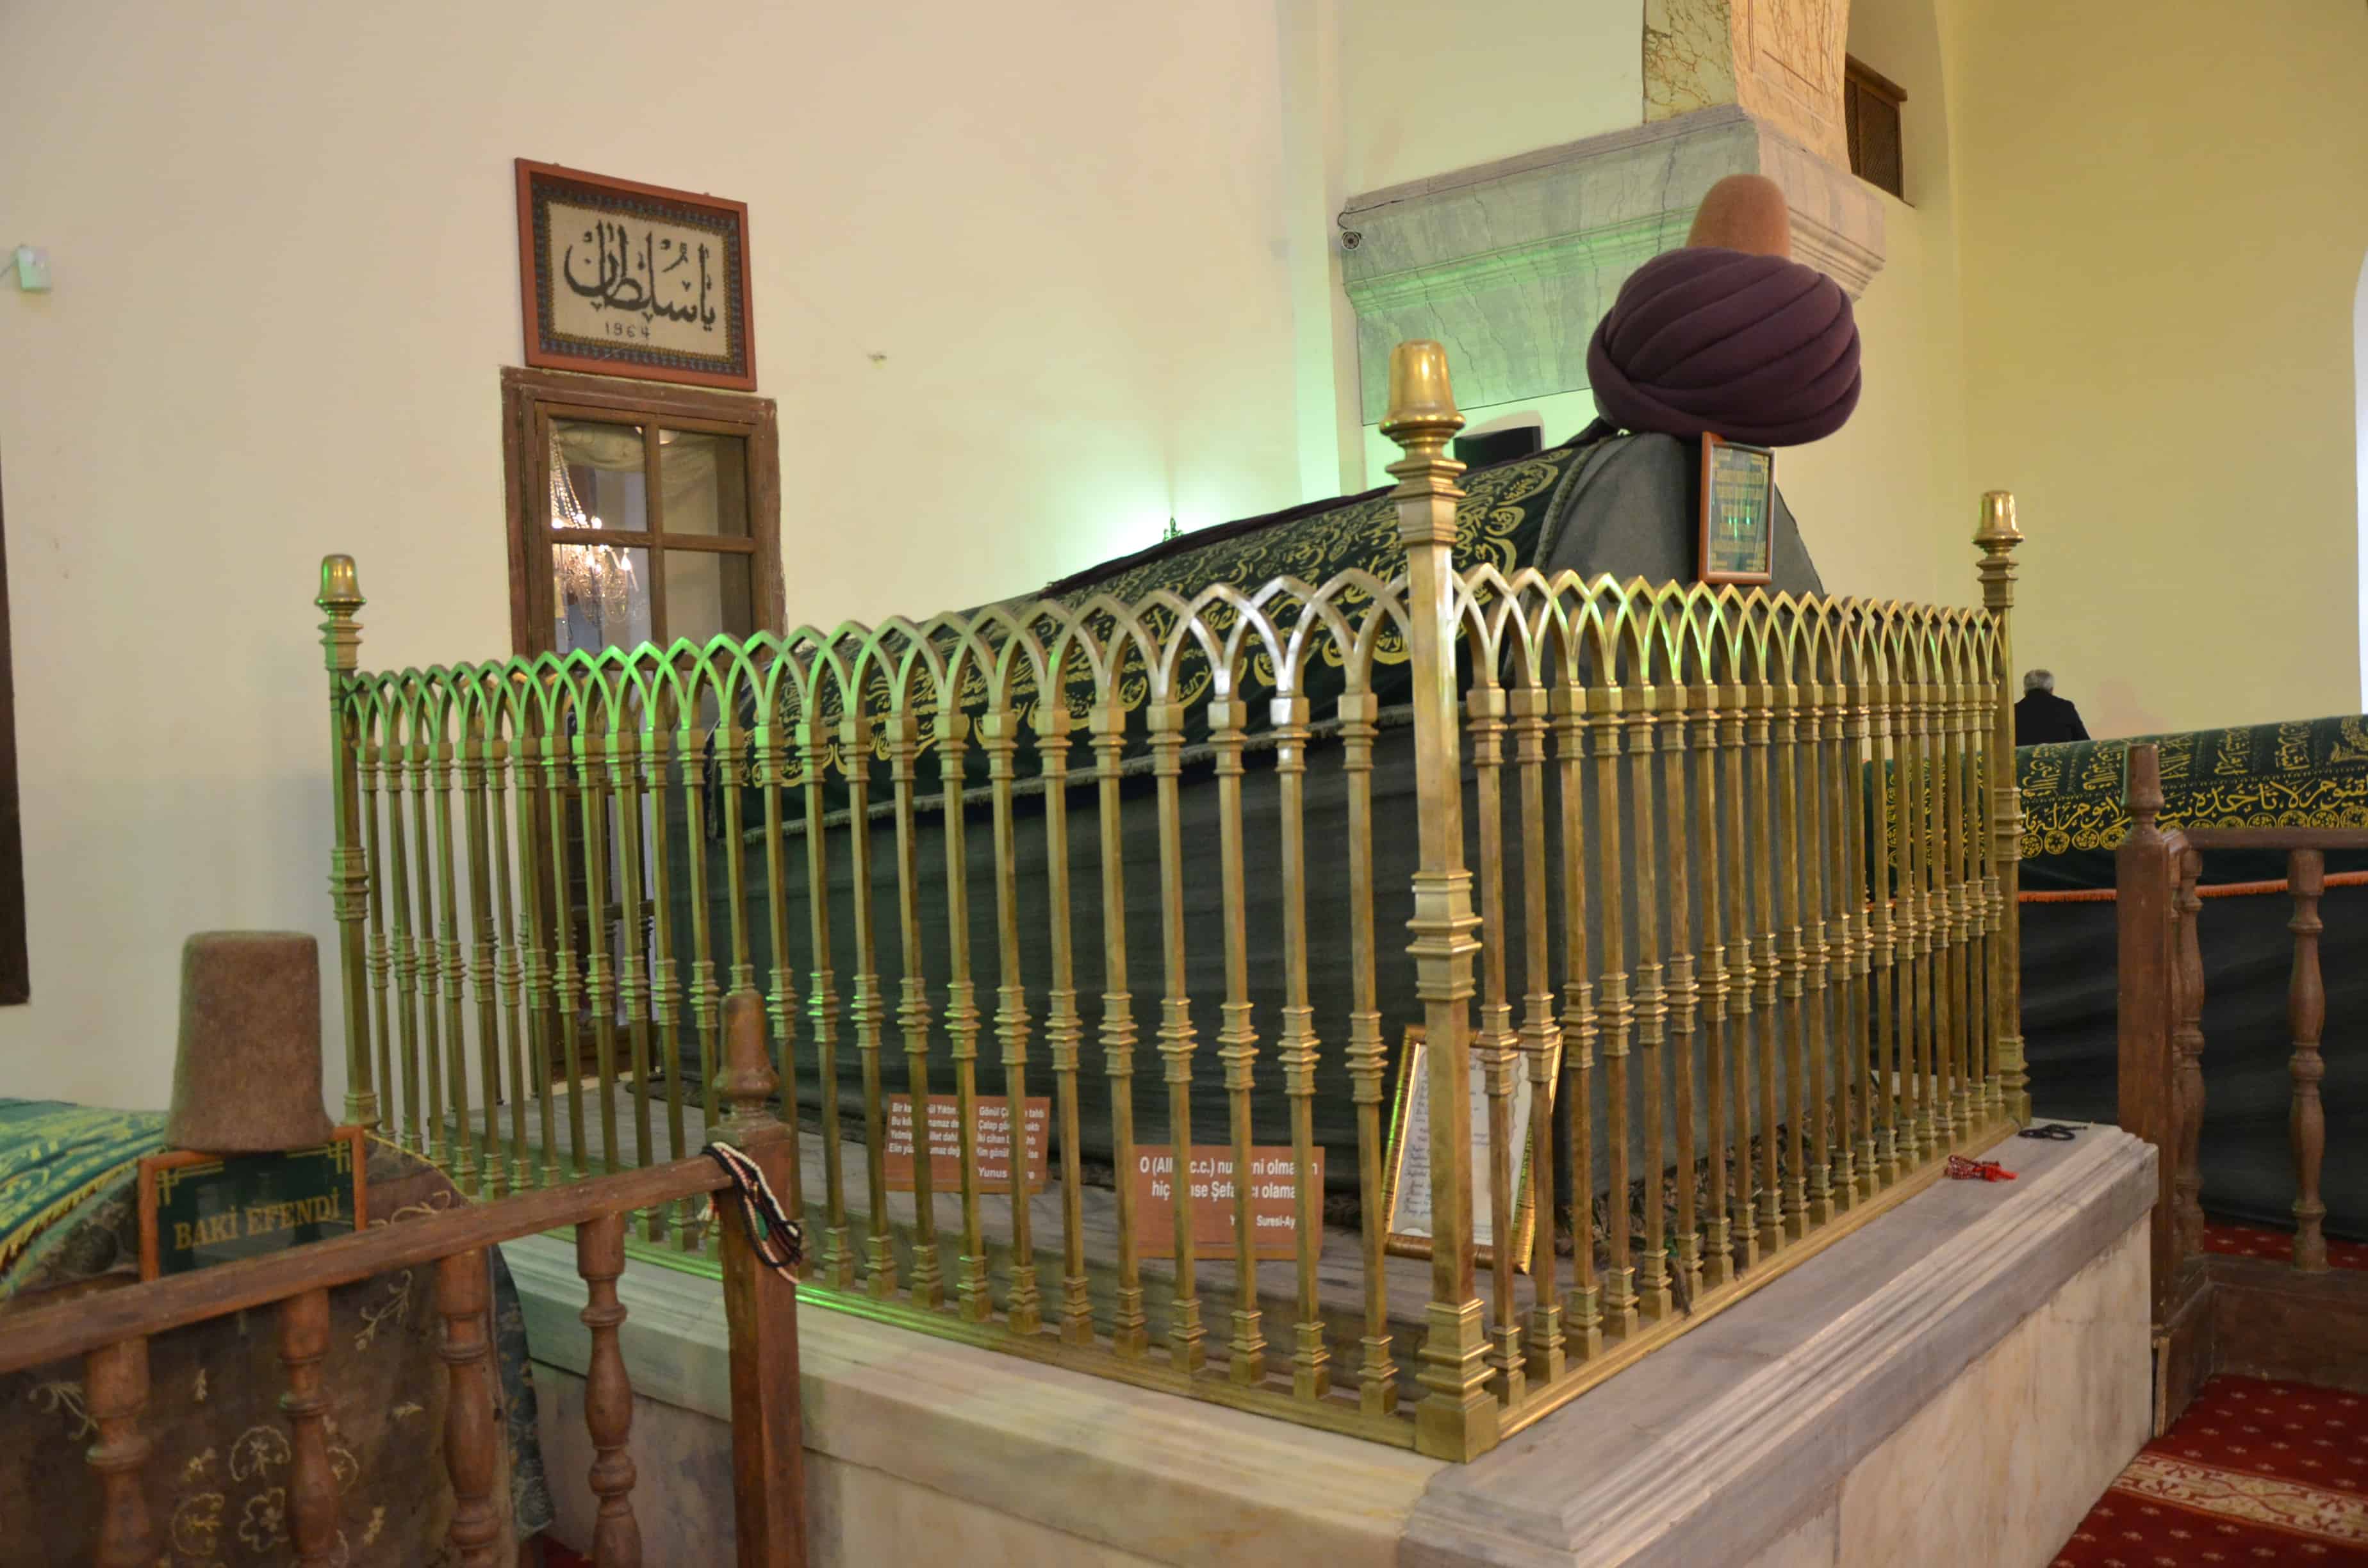 Tomb of Sultan Divani at the Sultan Divani Mevlevi Lodge Museum in Afyon, Turkey